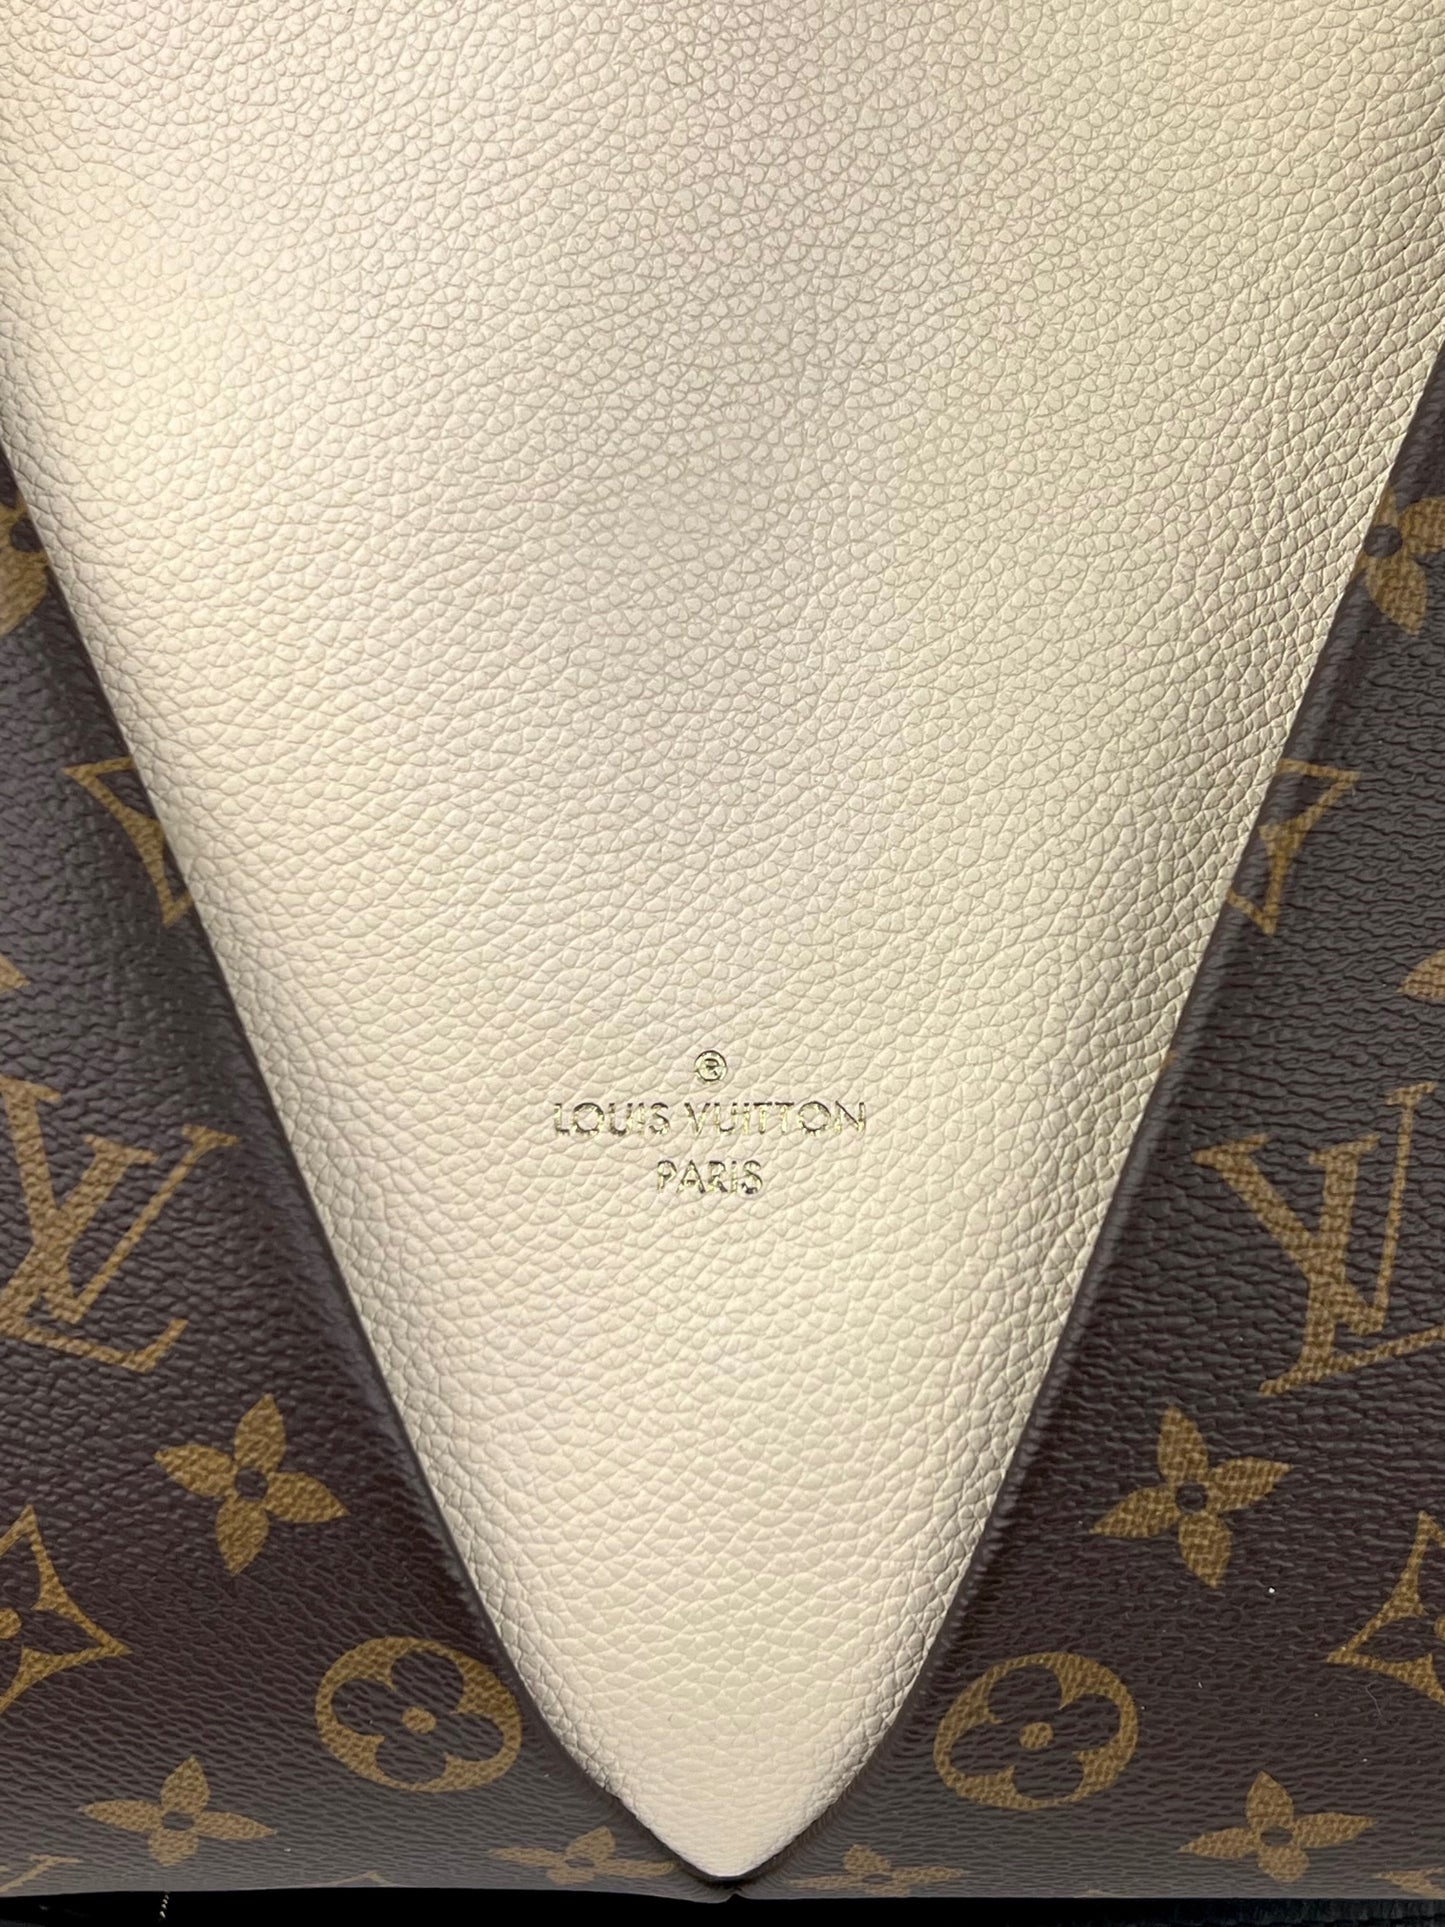 Louis Vuitton V Tote Monogram Canvas Leather Shoulder Bag Black